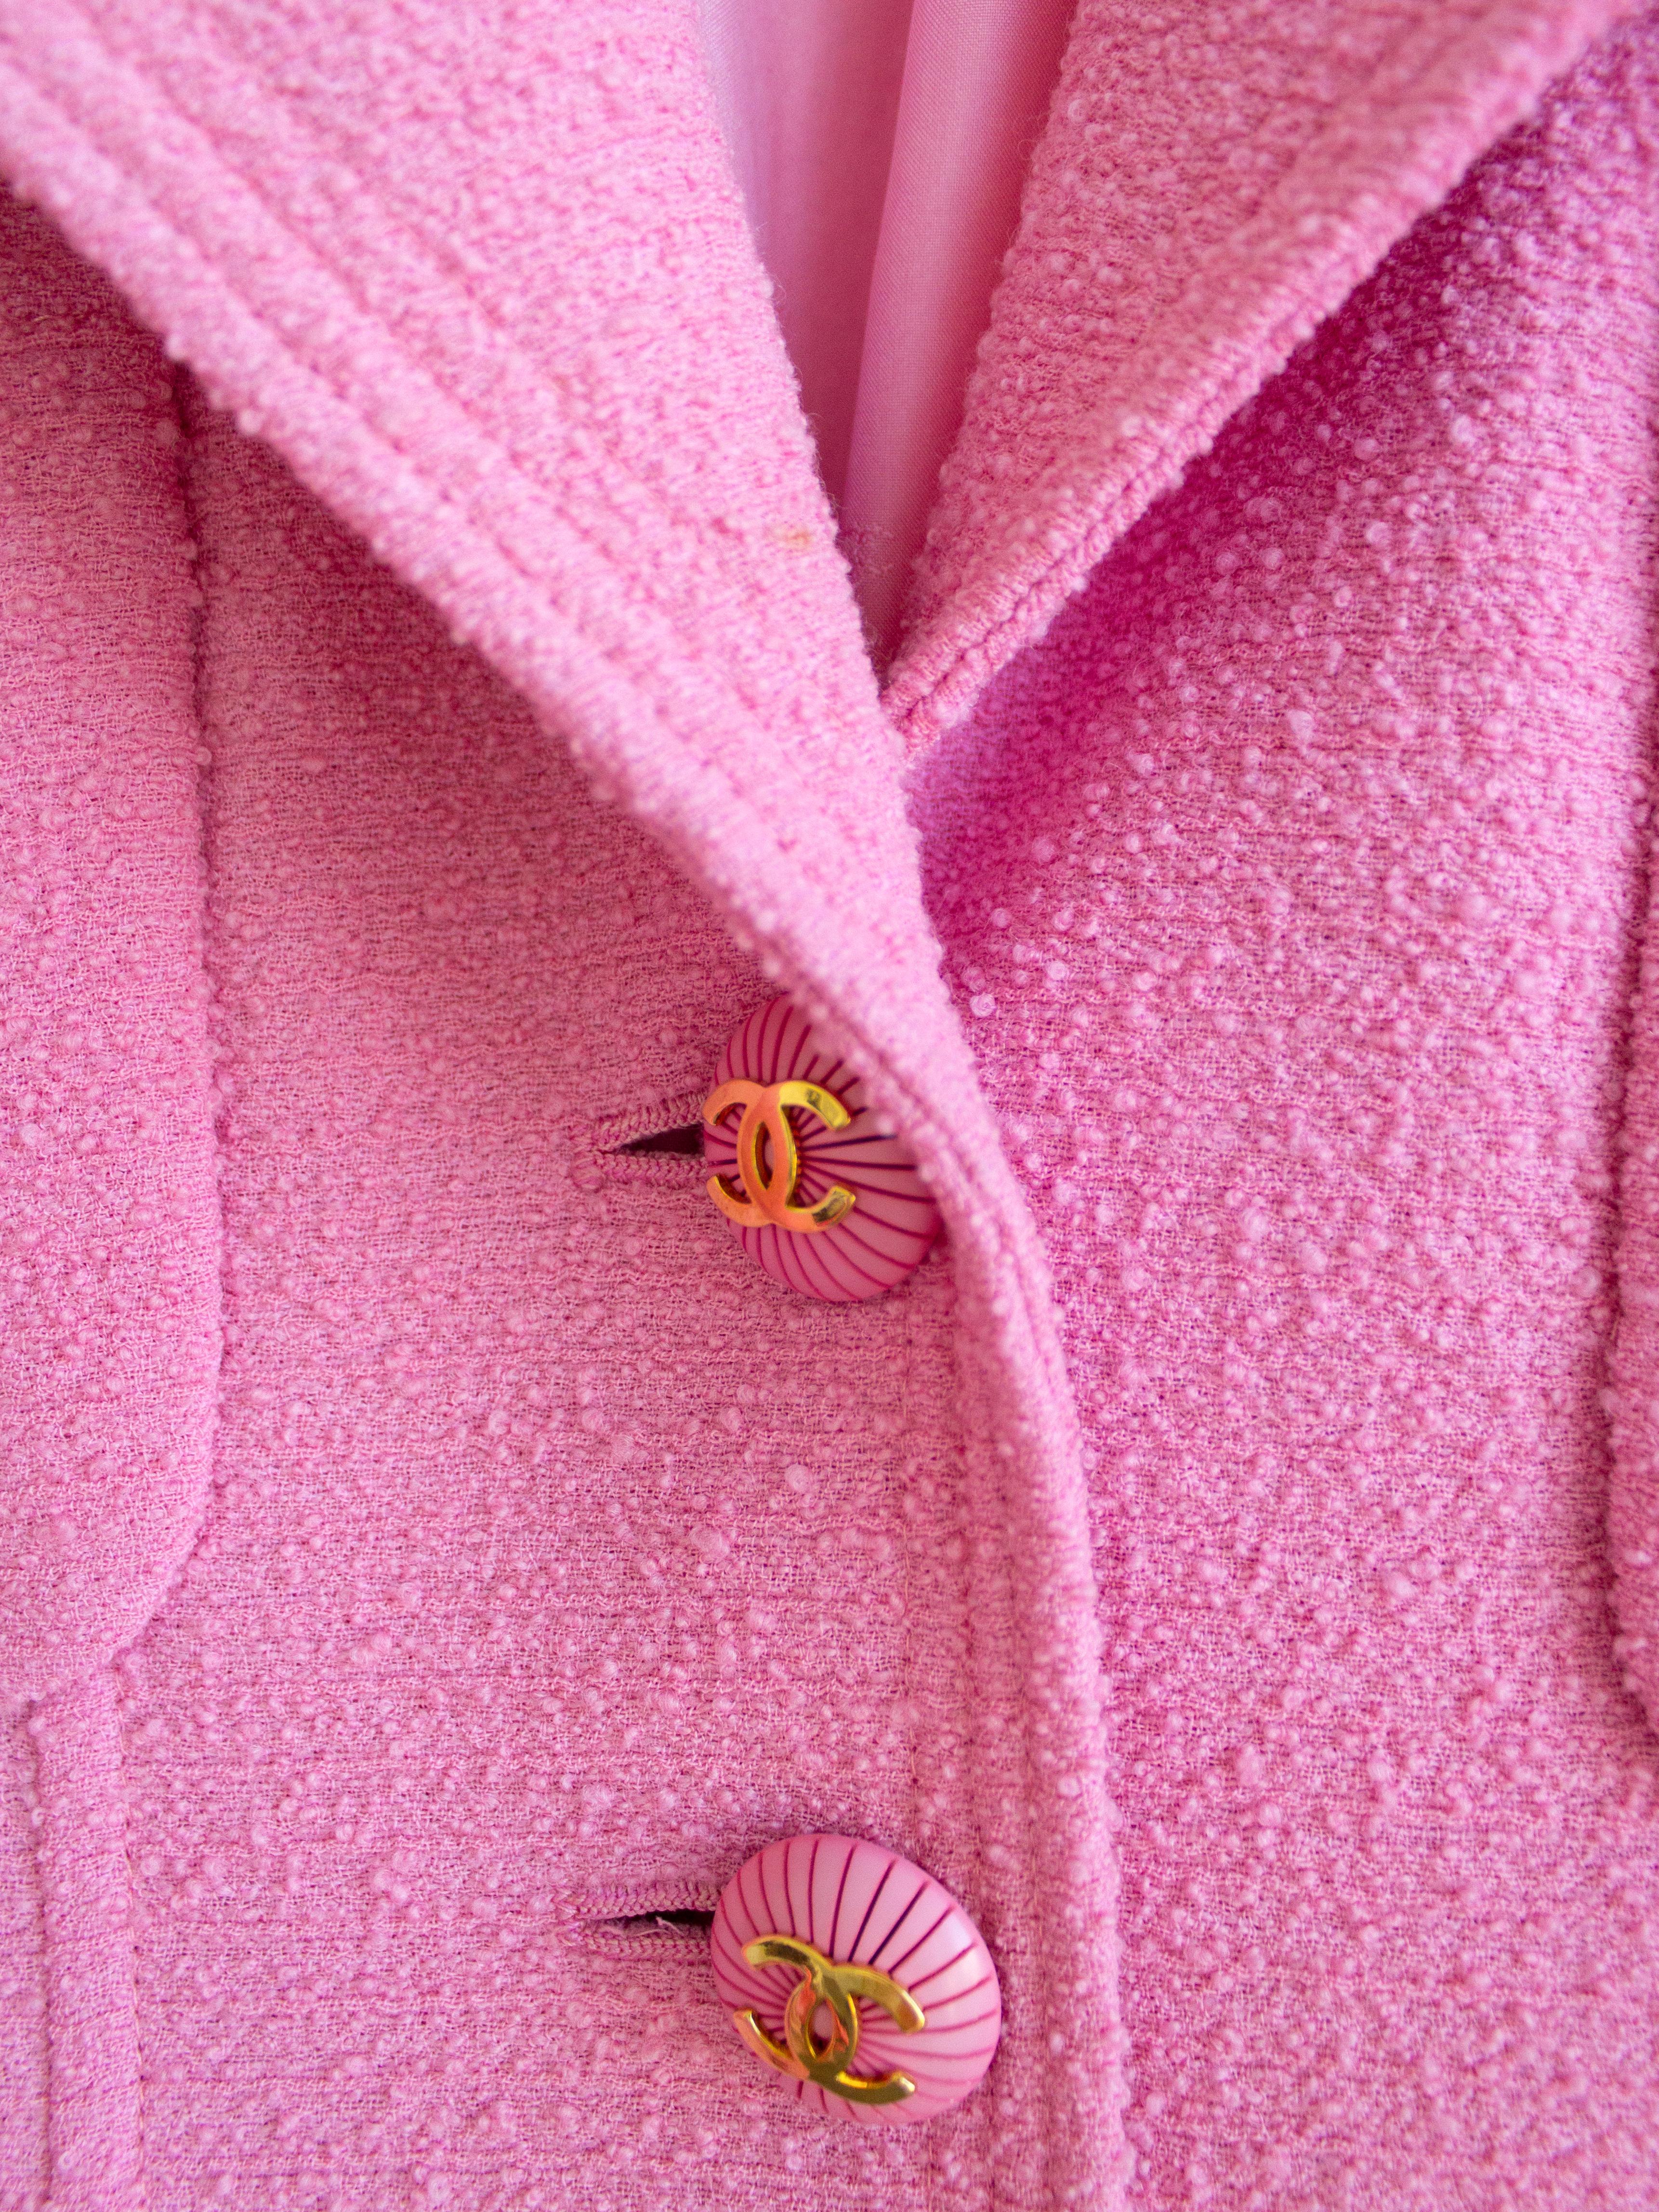 Rare Chanel Vintage Cruise 1993 Bubblegum Pink Gold 93C Tweed Jacket Skirt Suit 6